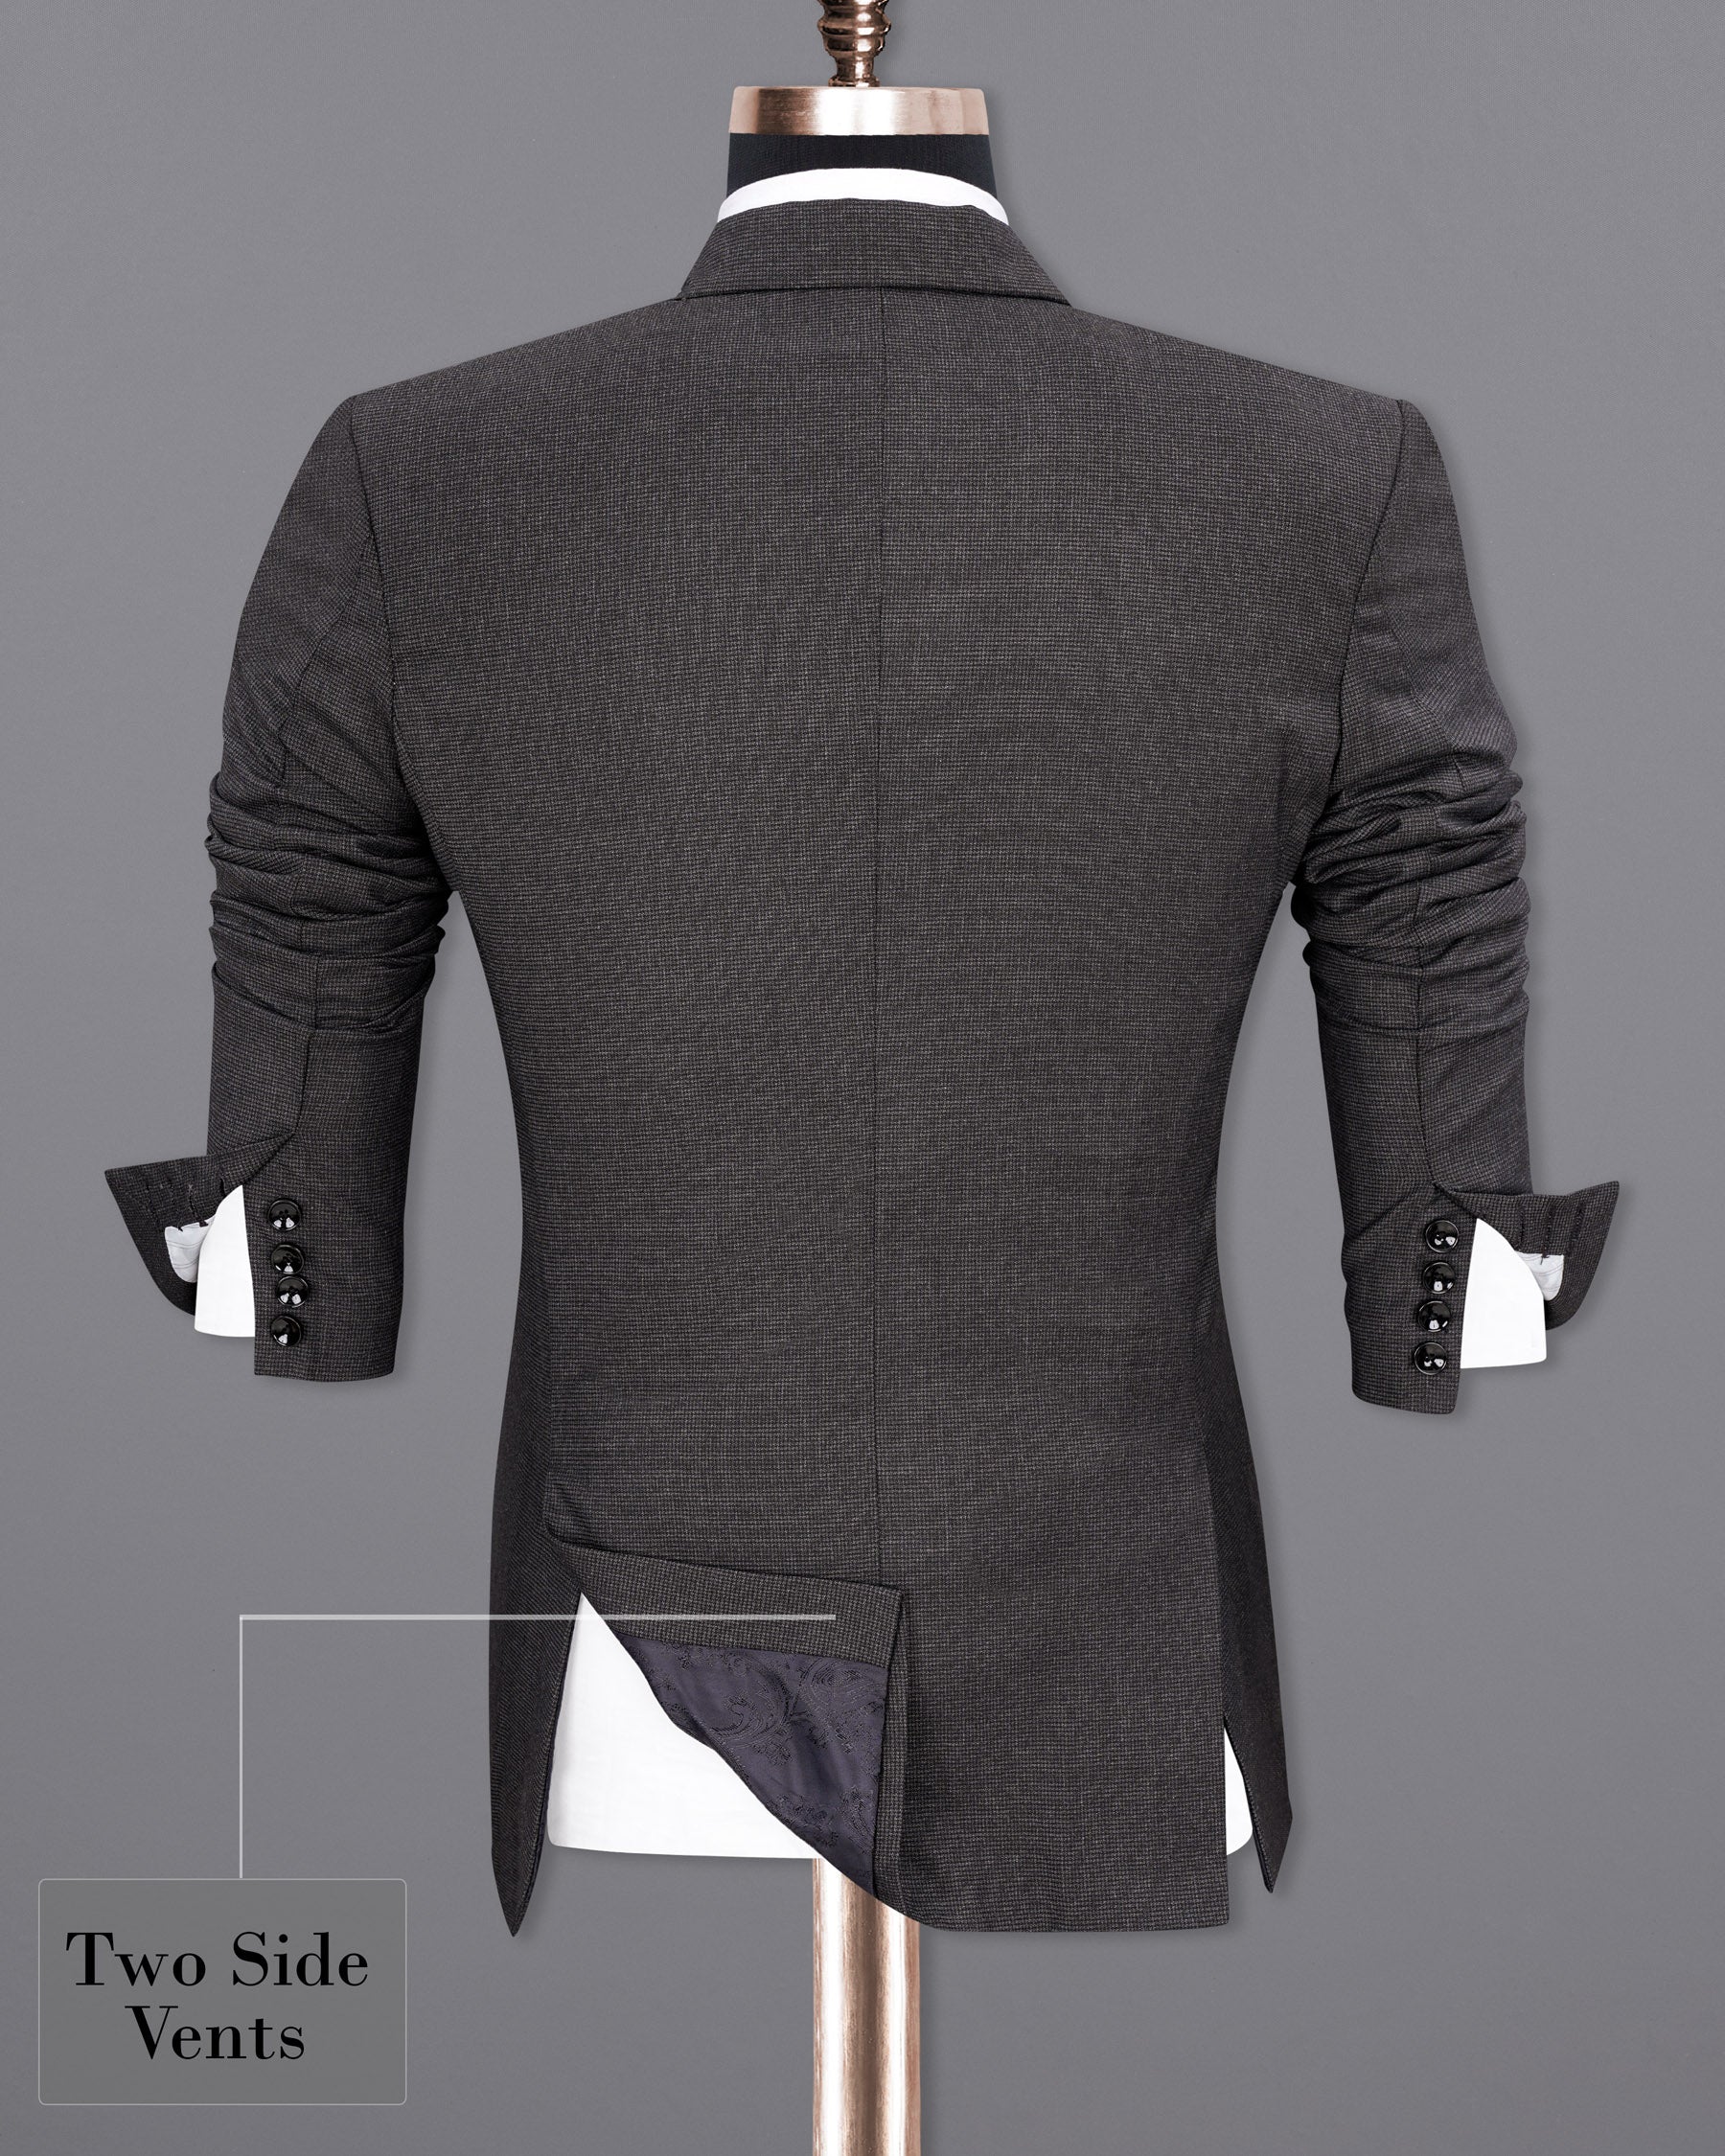 Baltic Sea Grey Textured Suit